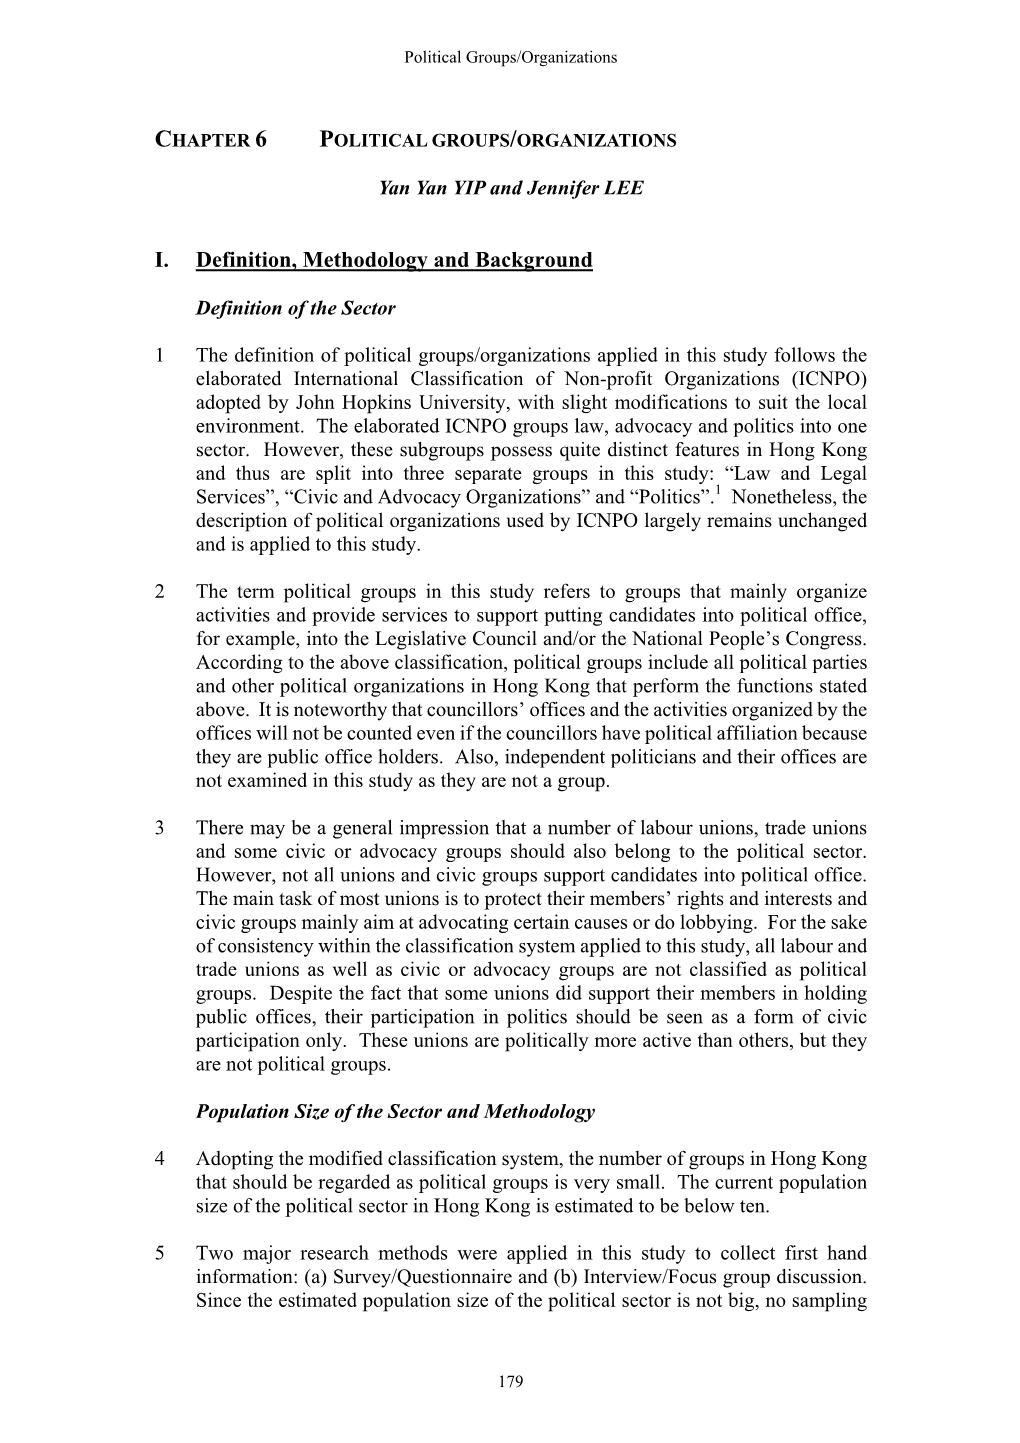 I. Definition, Methodology and Background